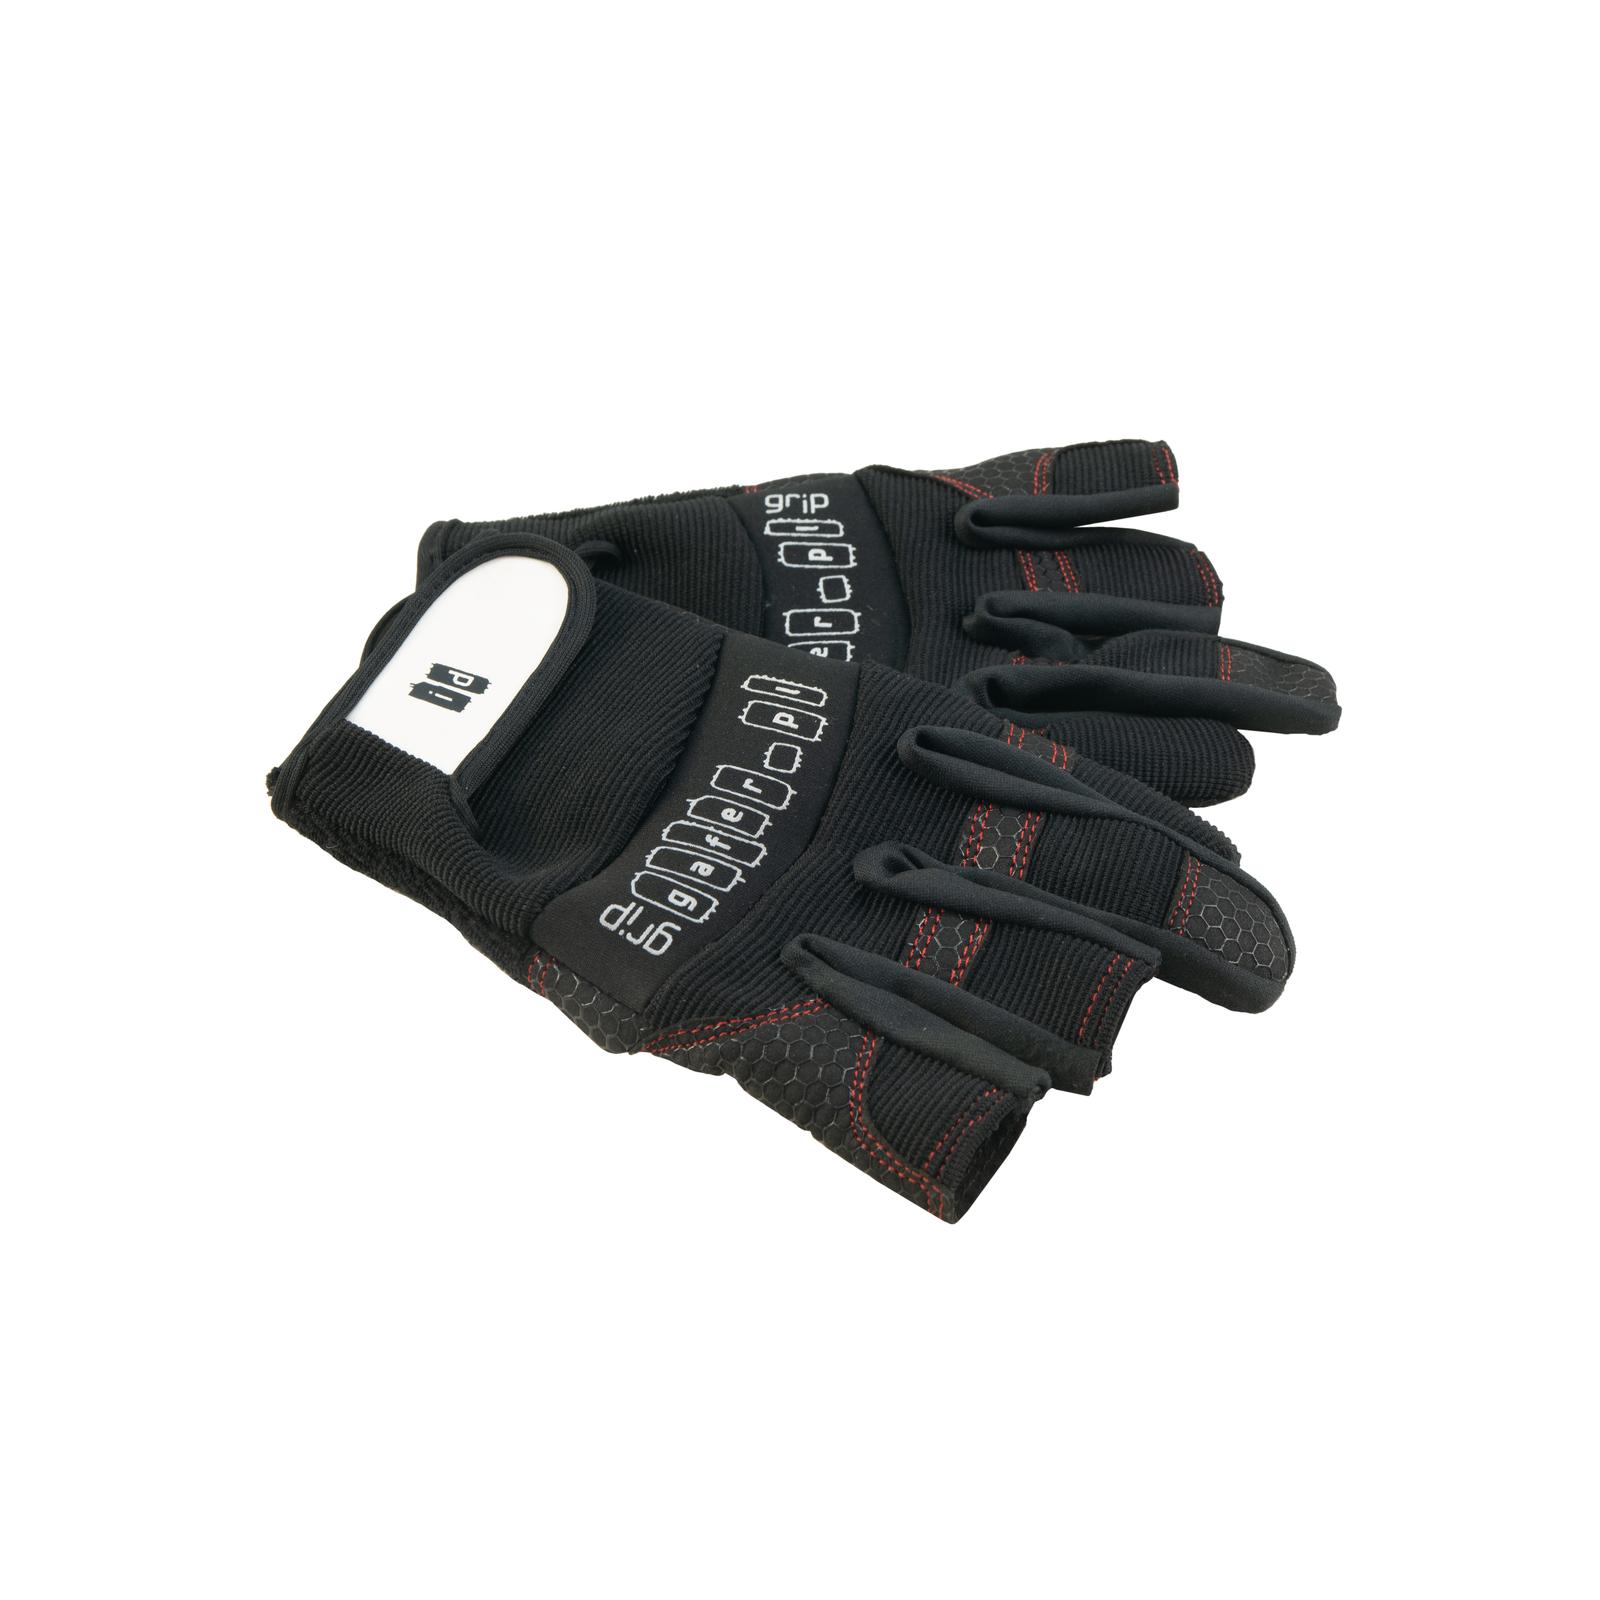 GAFER.PL Farmer grip Glove size S